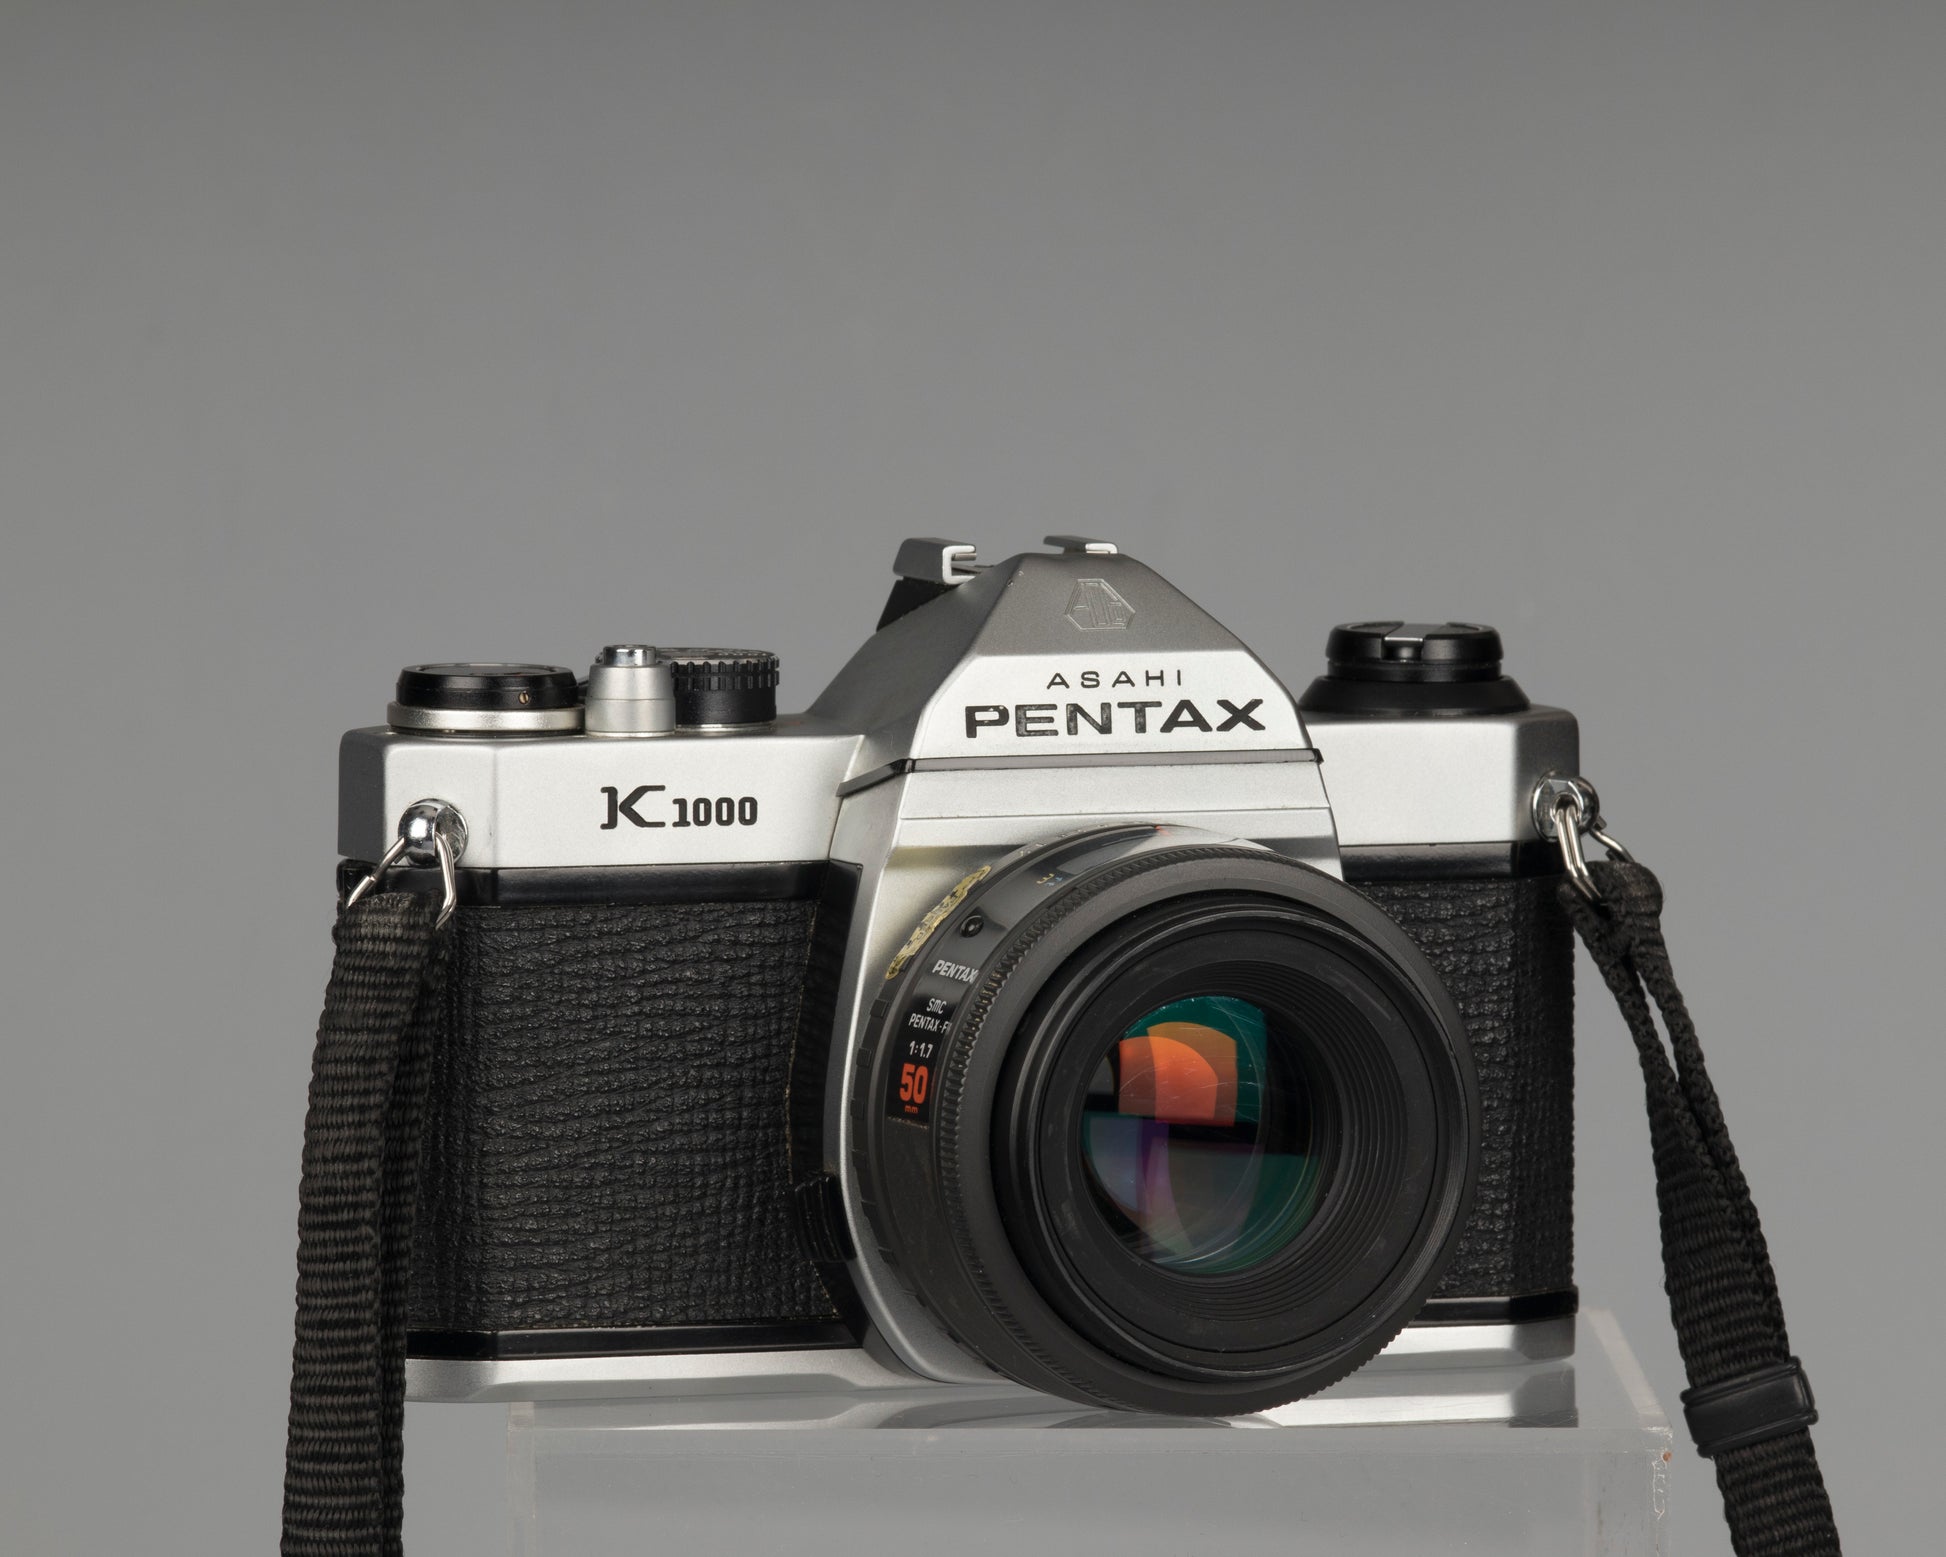 Pentax K1000 35mm SLR camera with  Pentax Forums SMC Pentax-F 50mm F1.7 lens